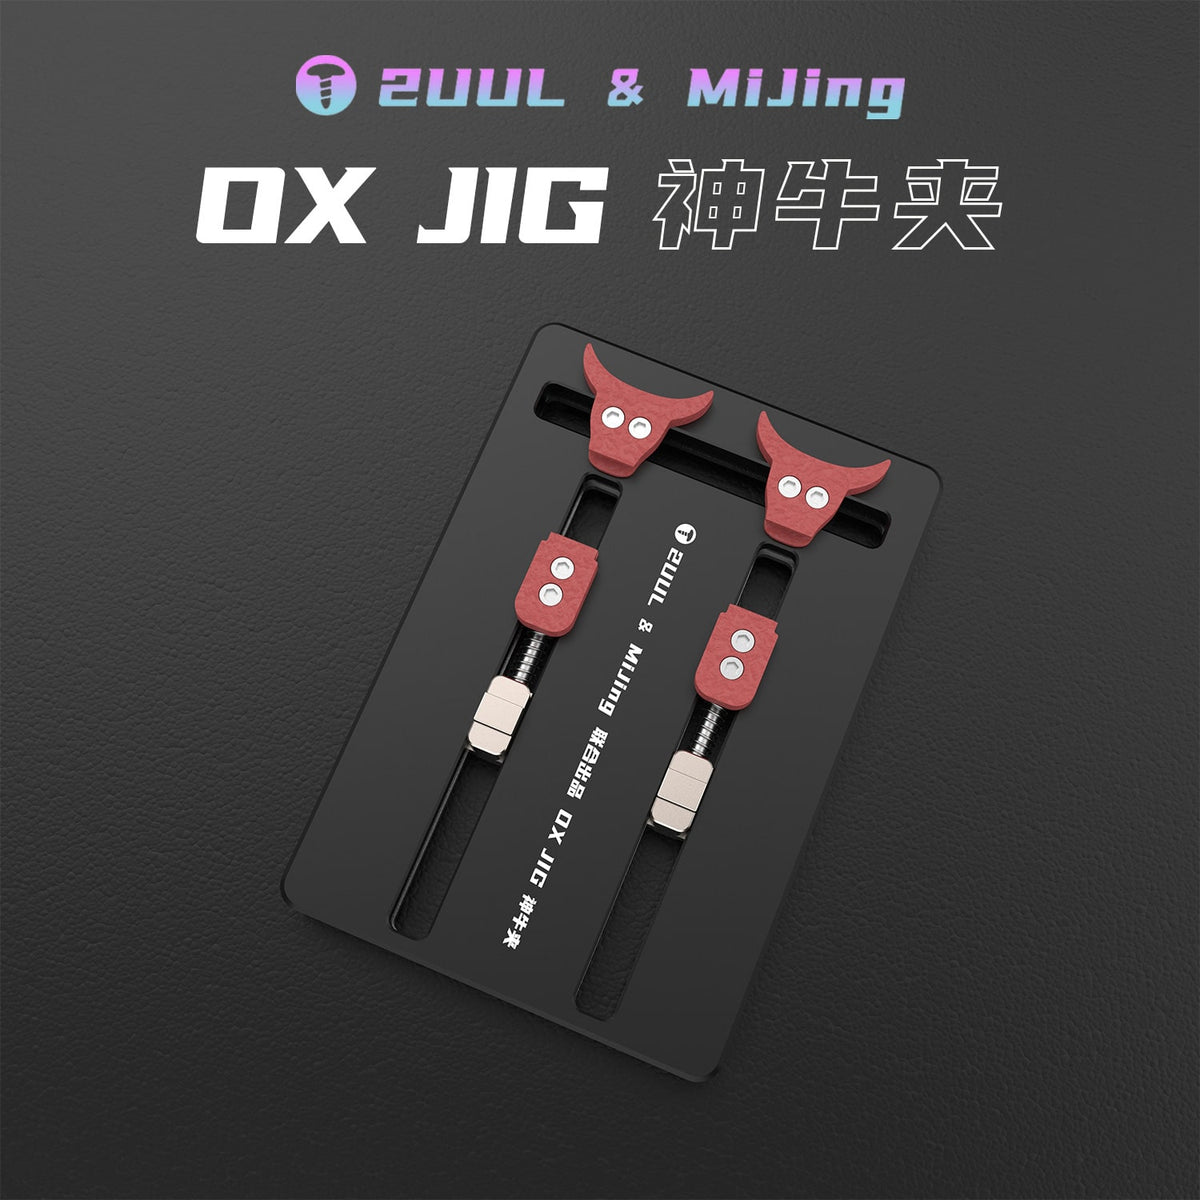 2UUL OX JIG MULTIFUNCTION PCB BOARD HOLDER FIXTURE